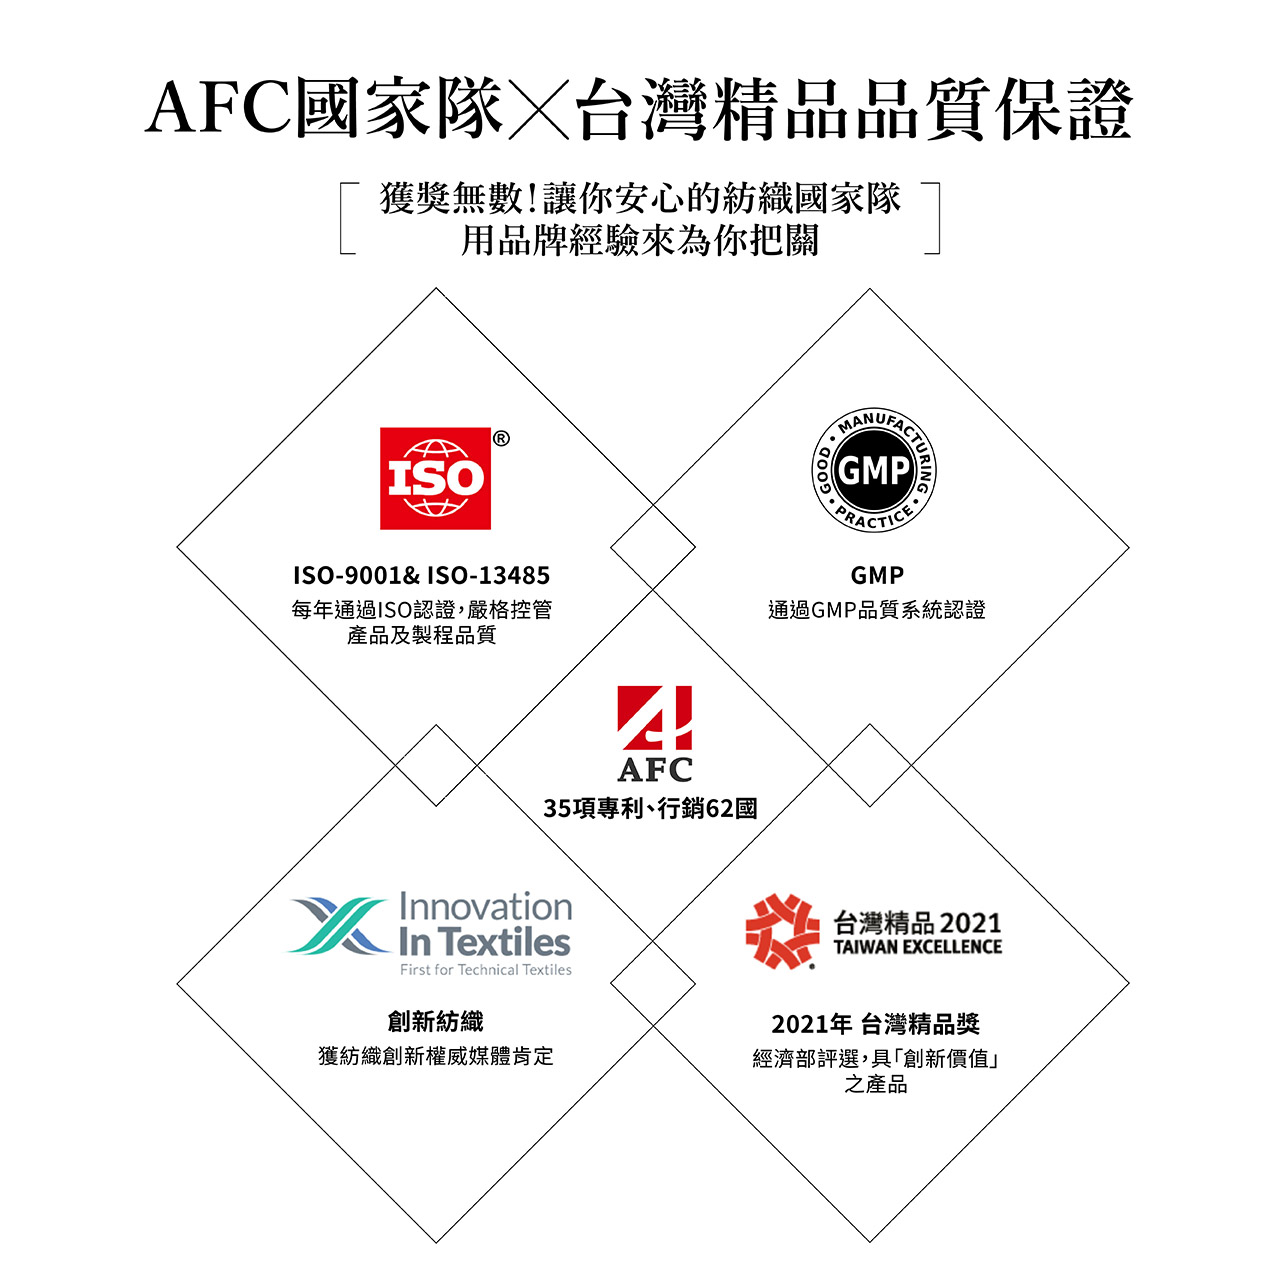 AFC國家隊X台灣精品品質保證:獲獎無數!讓你安心的紡織國家隊，用品牌經驗來為你把關!AFC通過ISO-9001&ISO-13485、GMP品質系統認證、獲得紡織創新媒體權威肯定及榮獲台灣精品獎